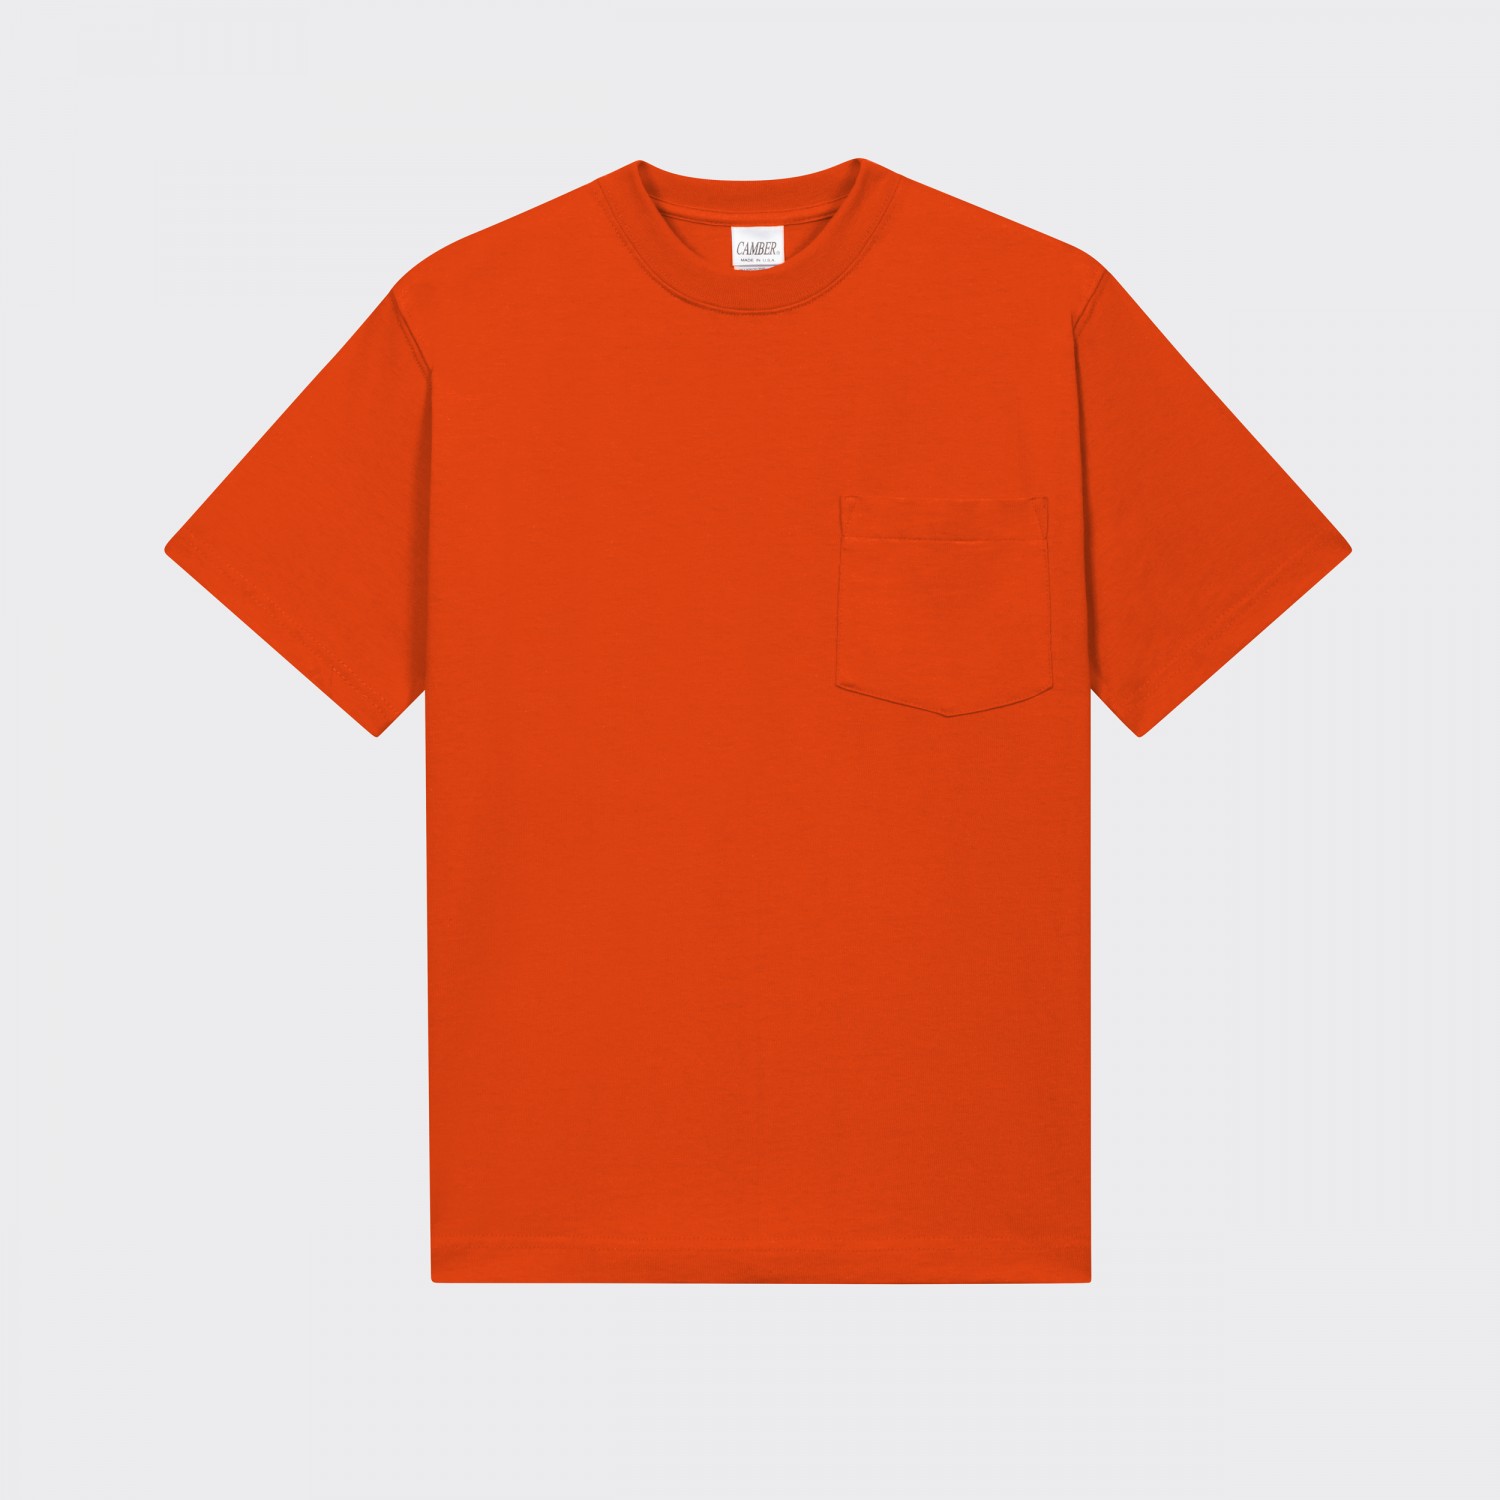 Camber USA : : Orange T-shirt Pocket